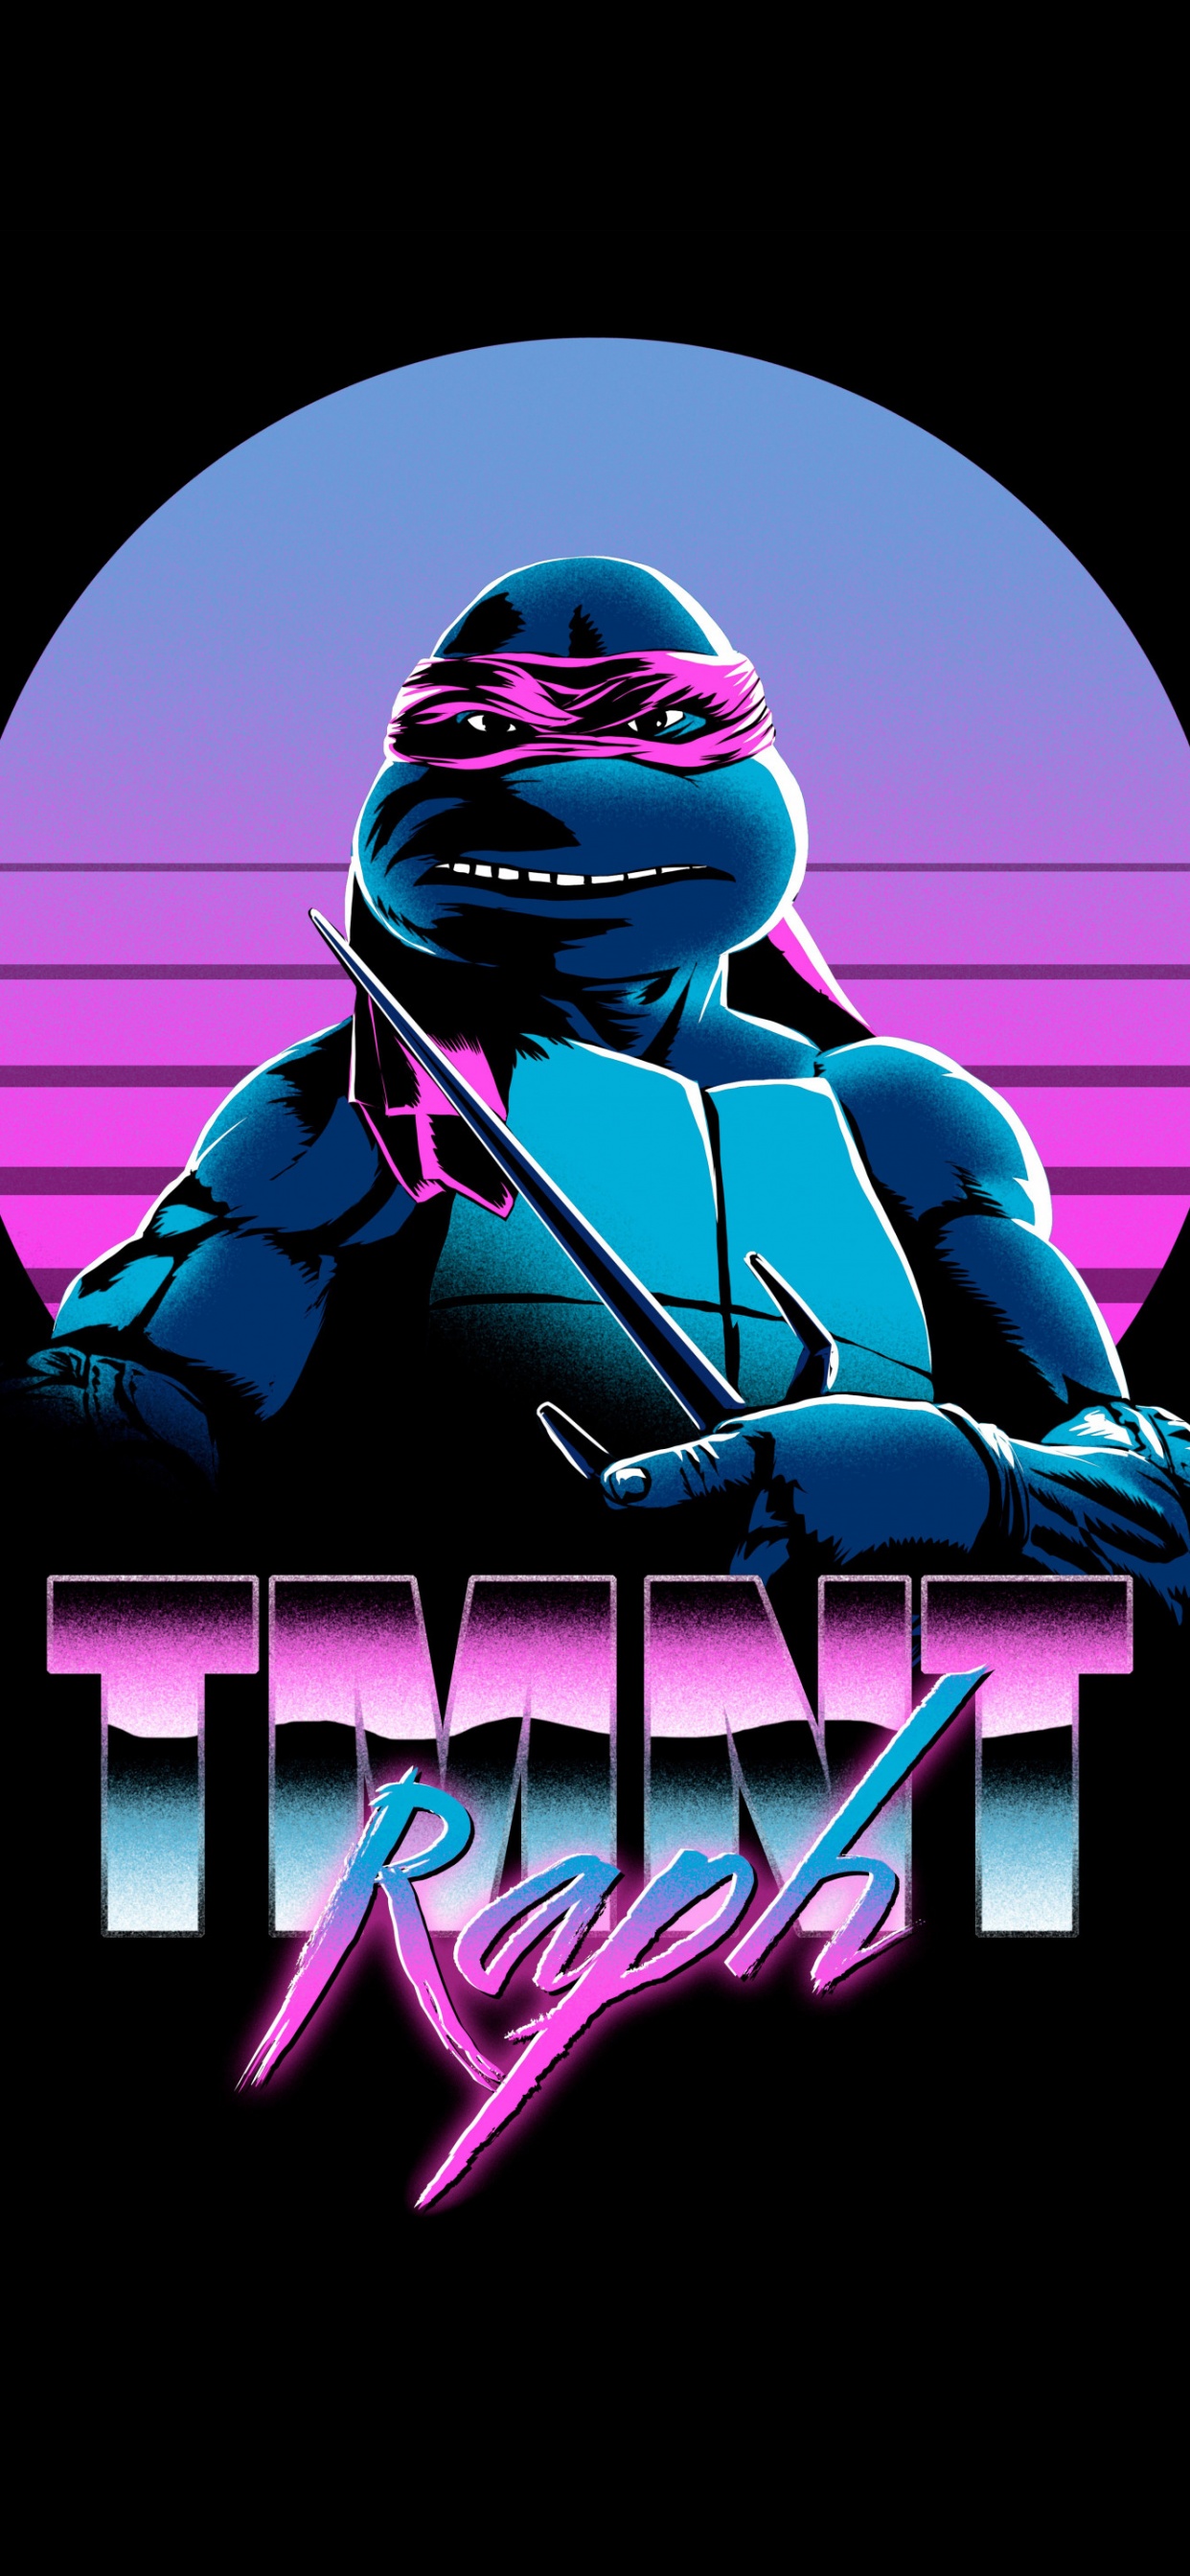 640x960 Ninja turtles Iphone 4 wallpaper